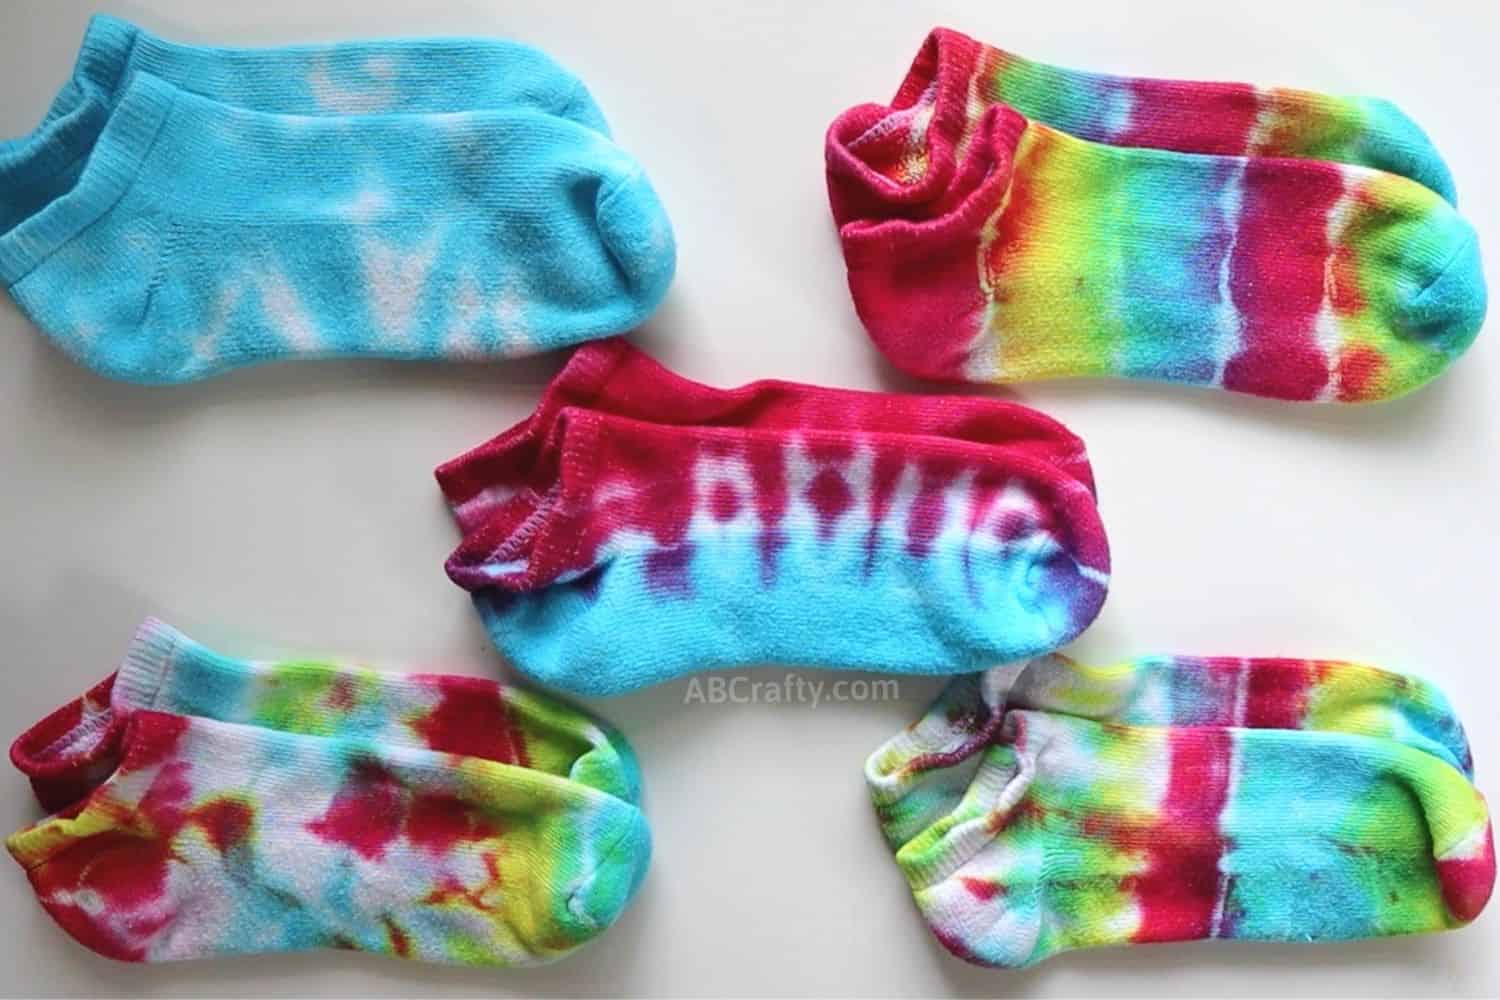 Tie Dye Socks - Easy Instructions to Tie Dye Socks at Home - AB Crafty